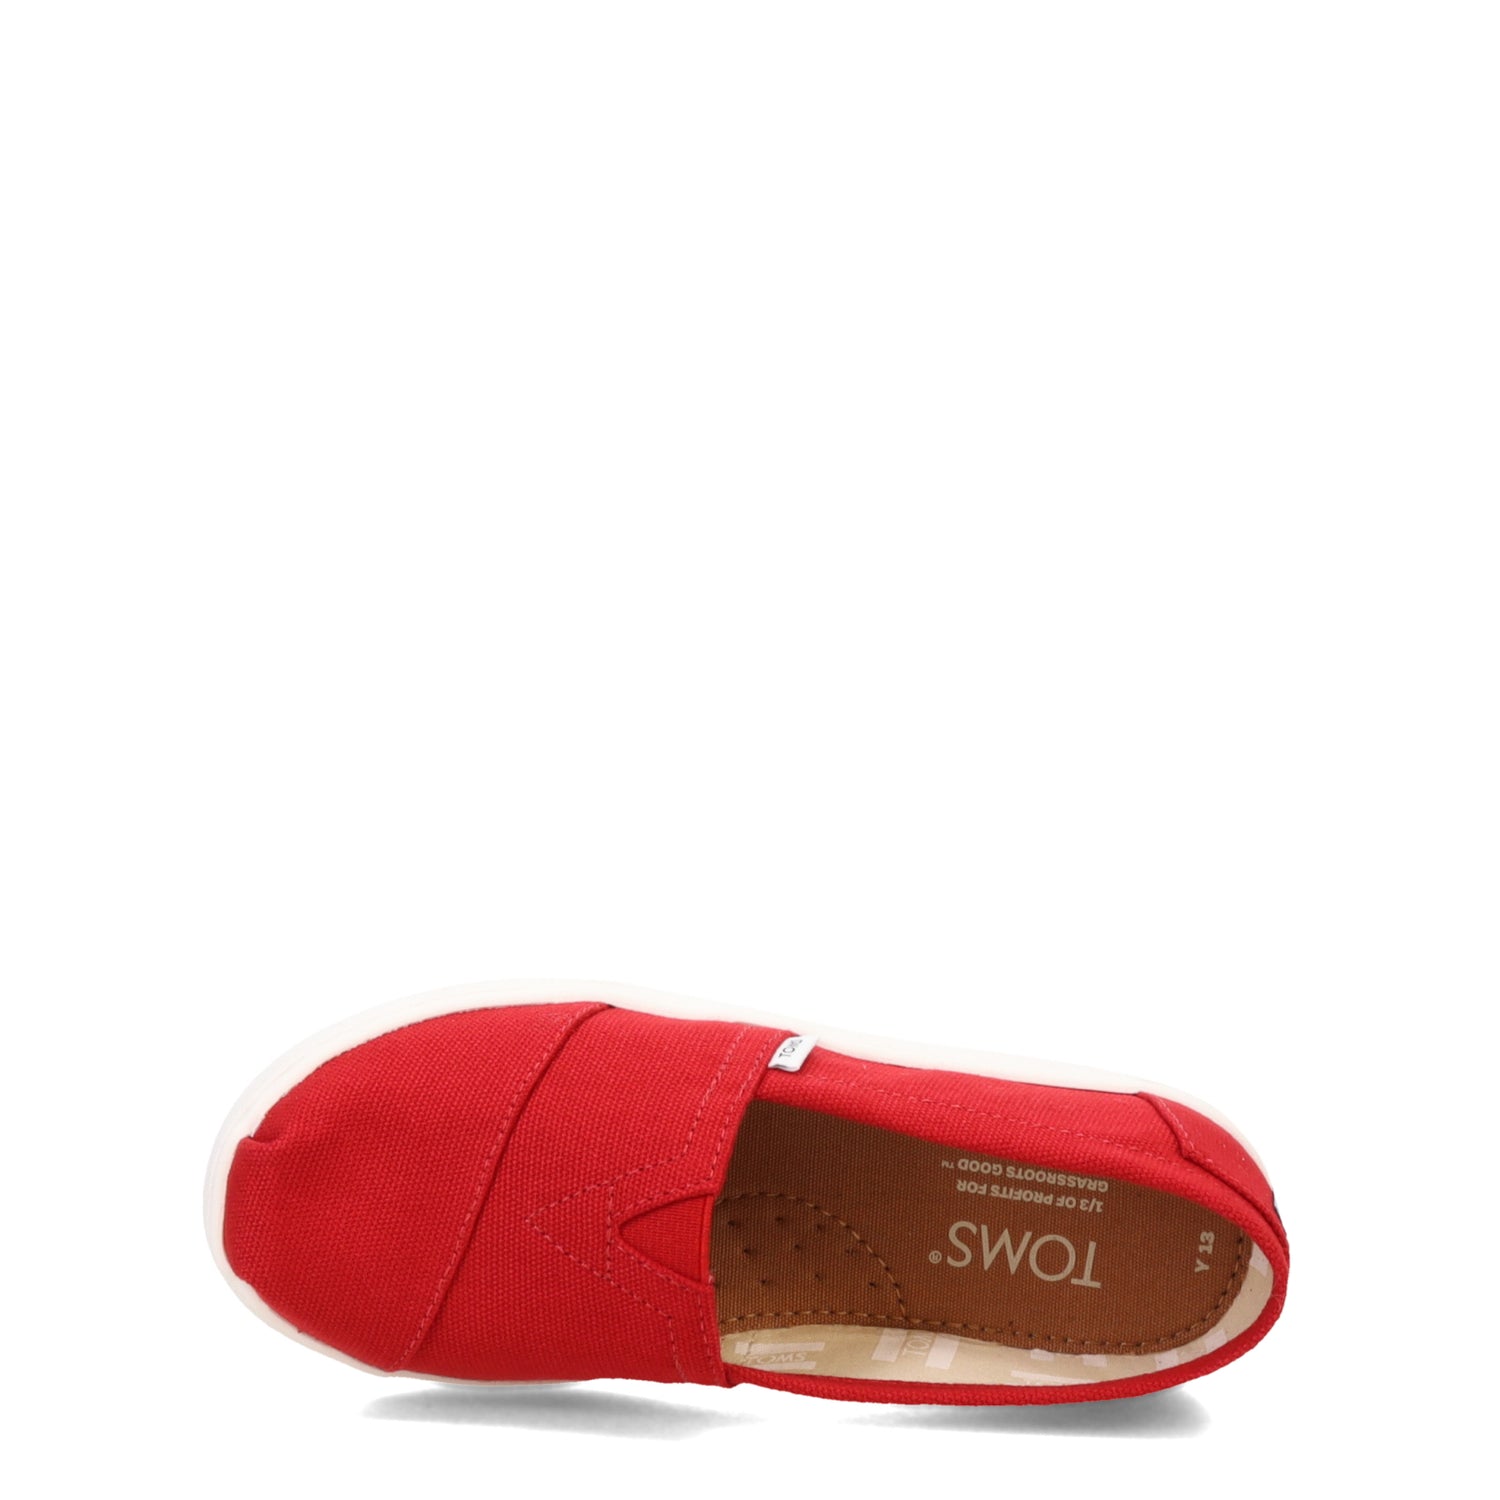 Peltz Shoes  Girl's Toms Alpargata Classic Slip-On - Little Kid & Big Kid RED 10010534